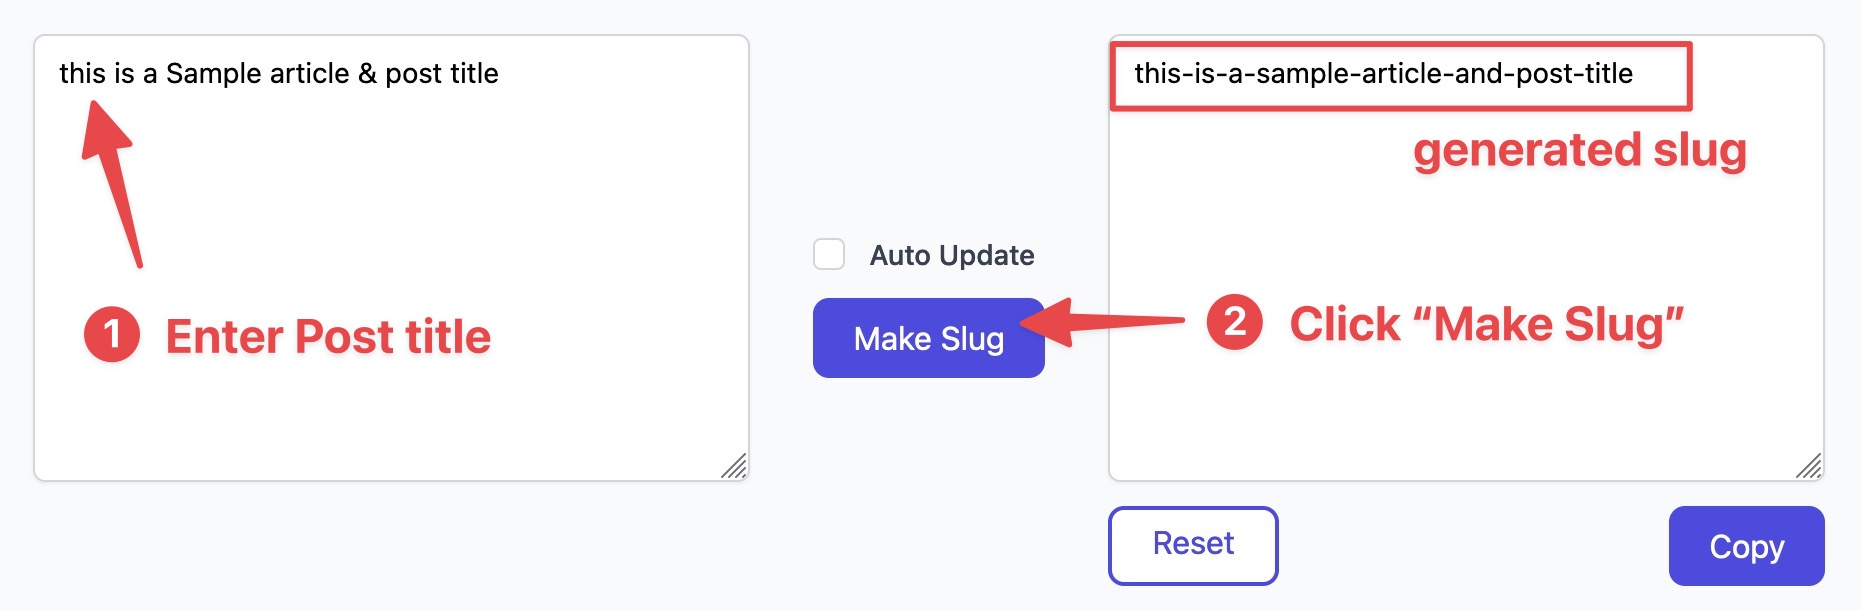 How to use Slug generator tool